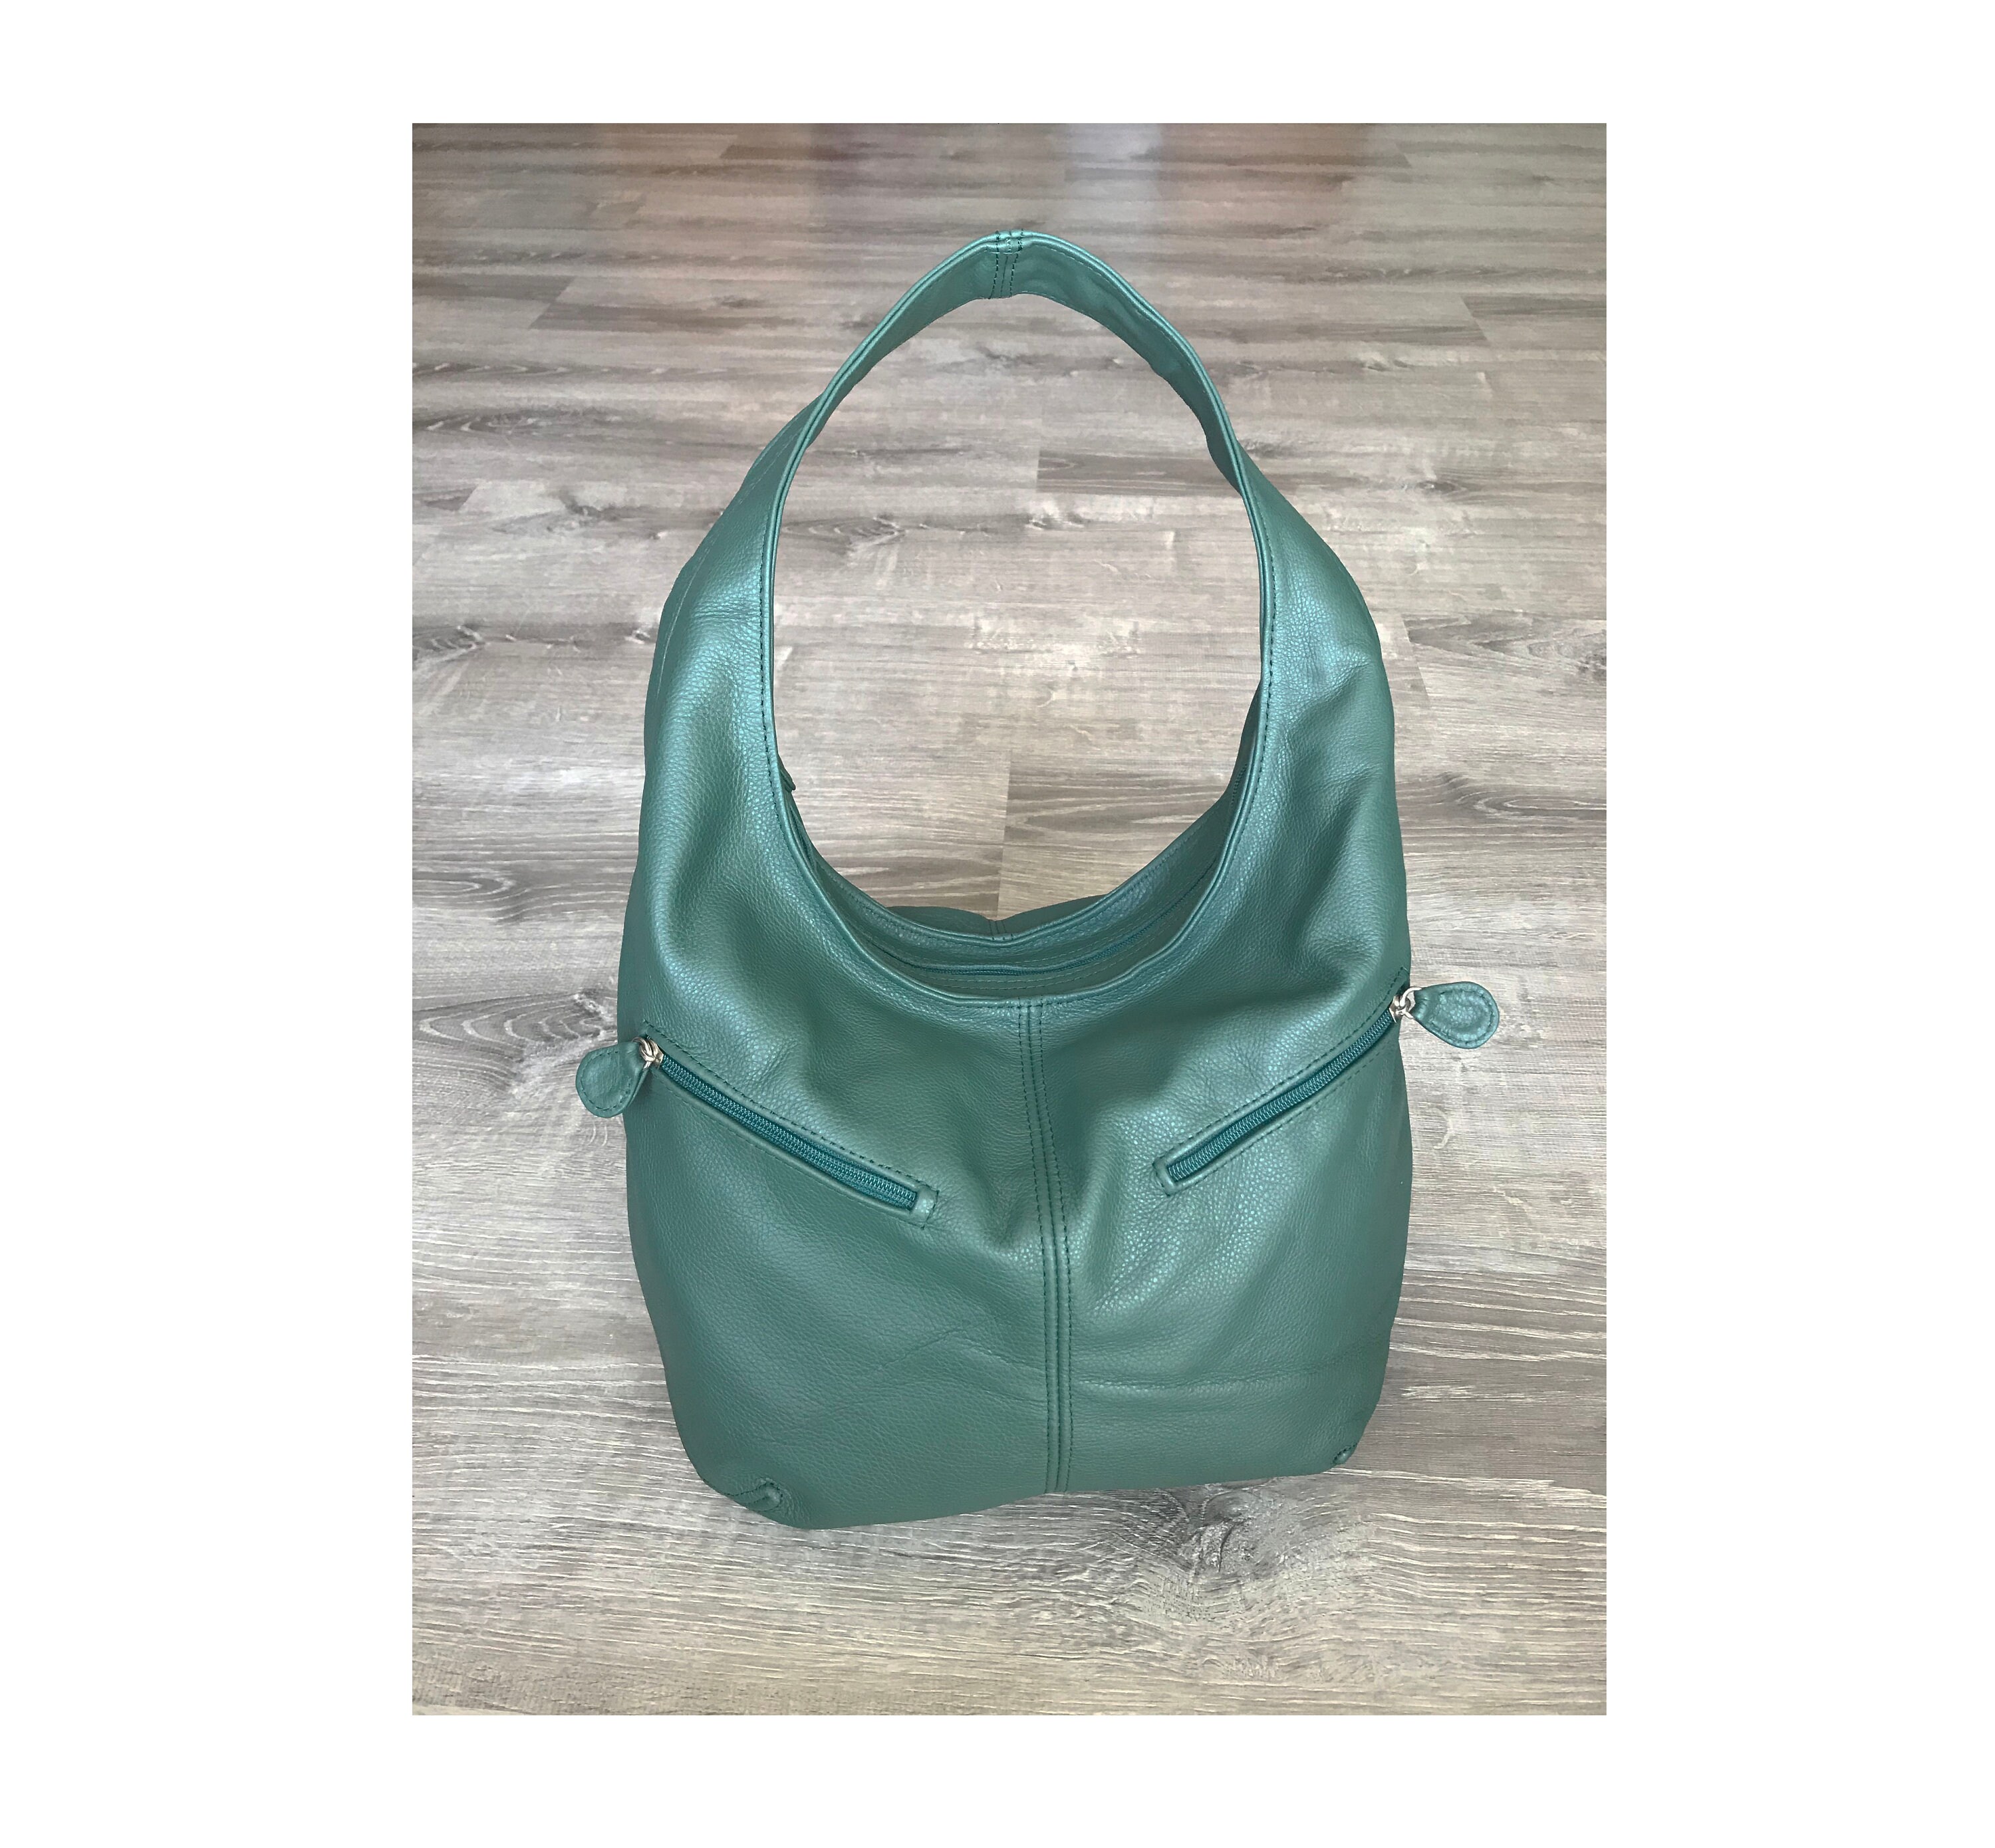 Small, lightweight, comfortable leather handbag from Ladybuq Art